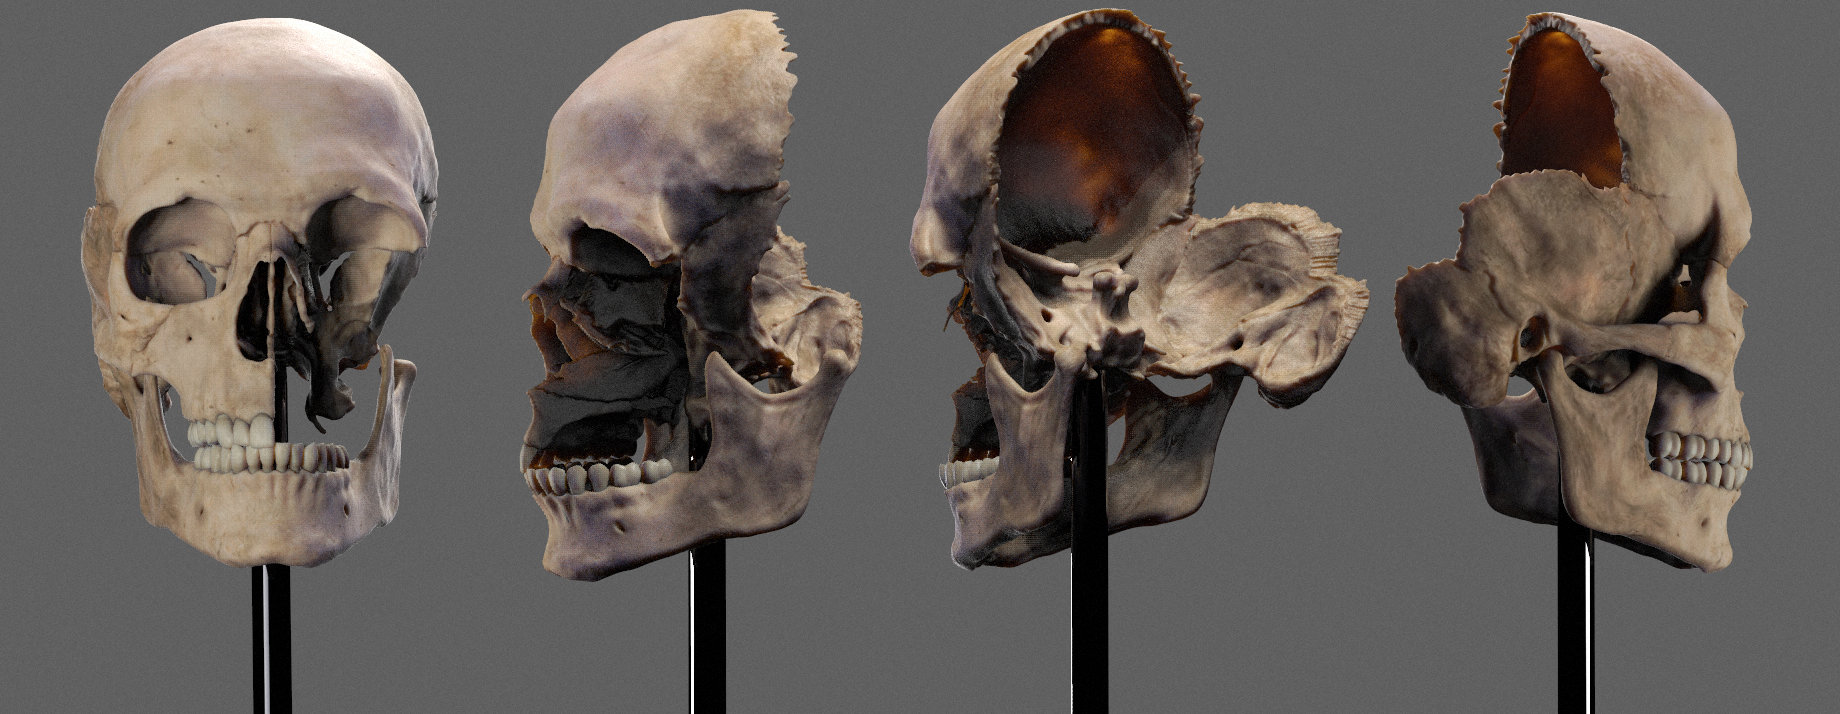 Human skull by Dmitrij Leppée